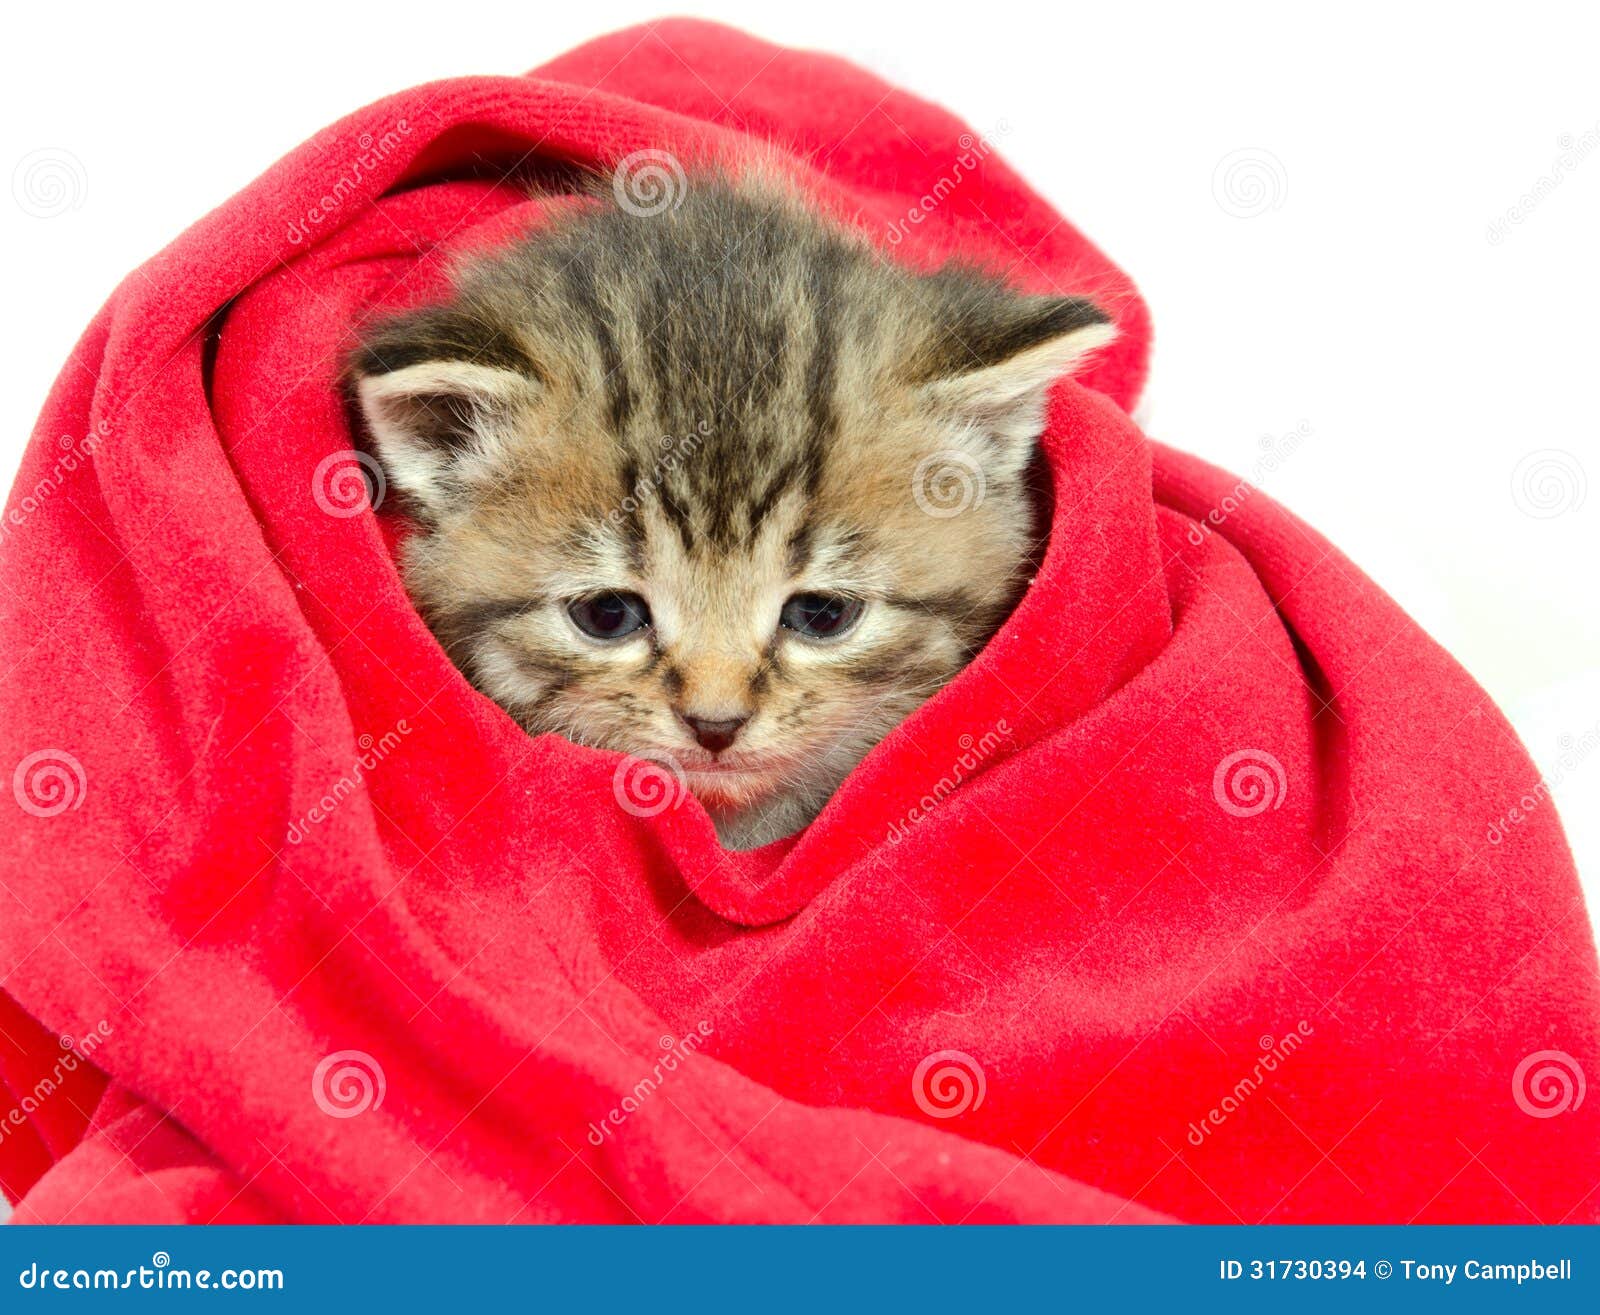 wrapped kitties